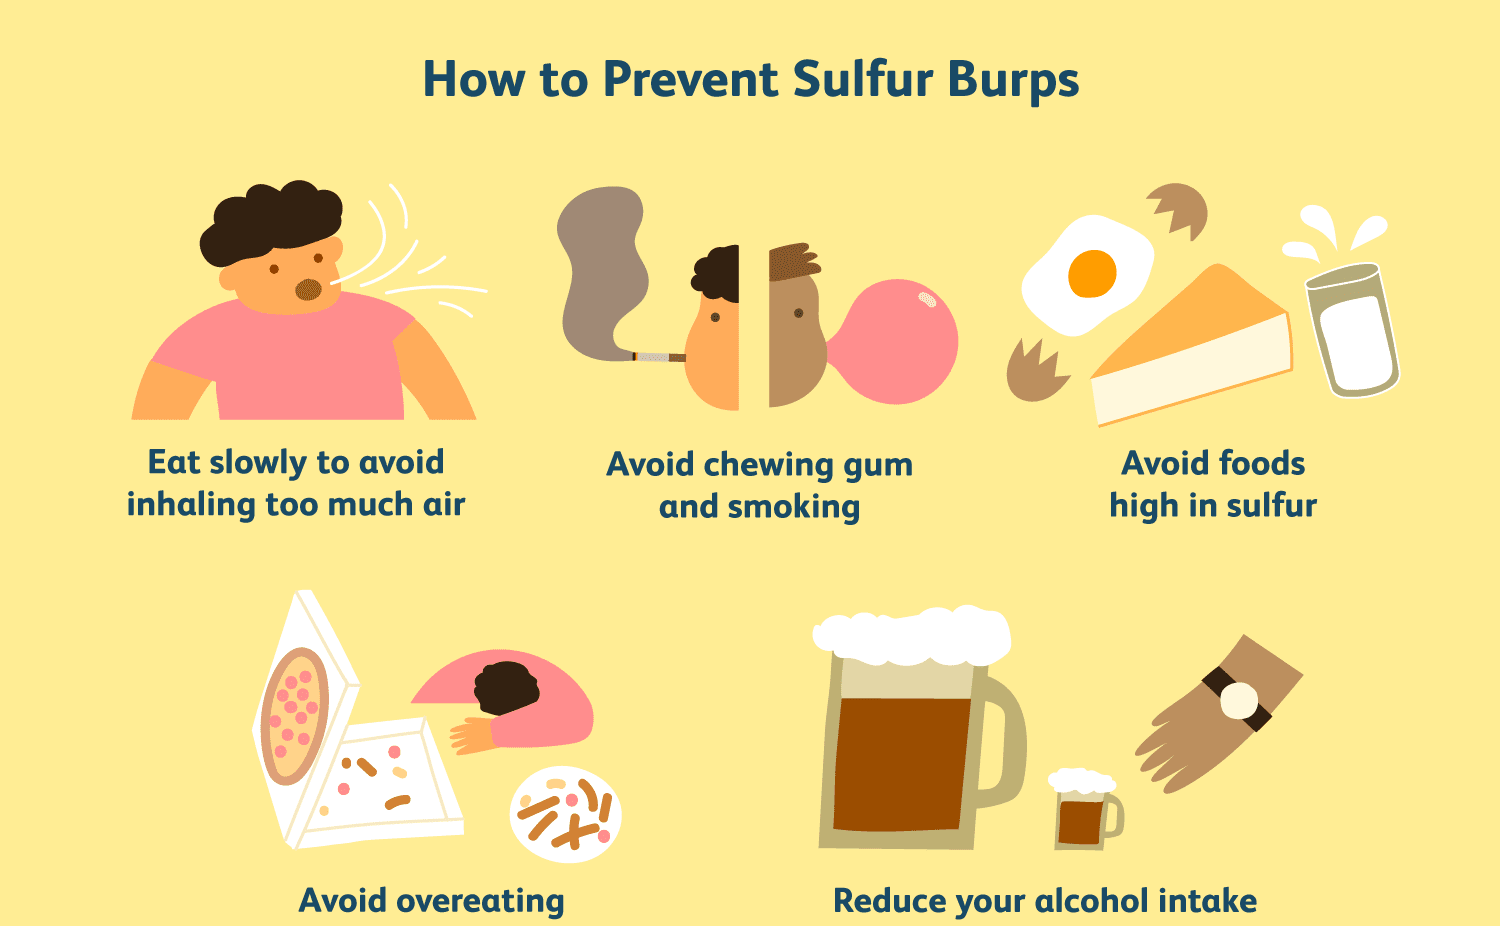 What Causes Sulphur Burps